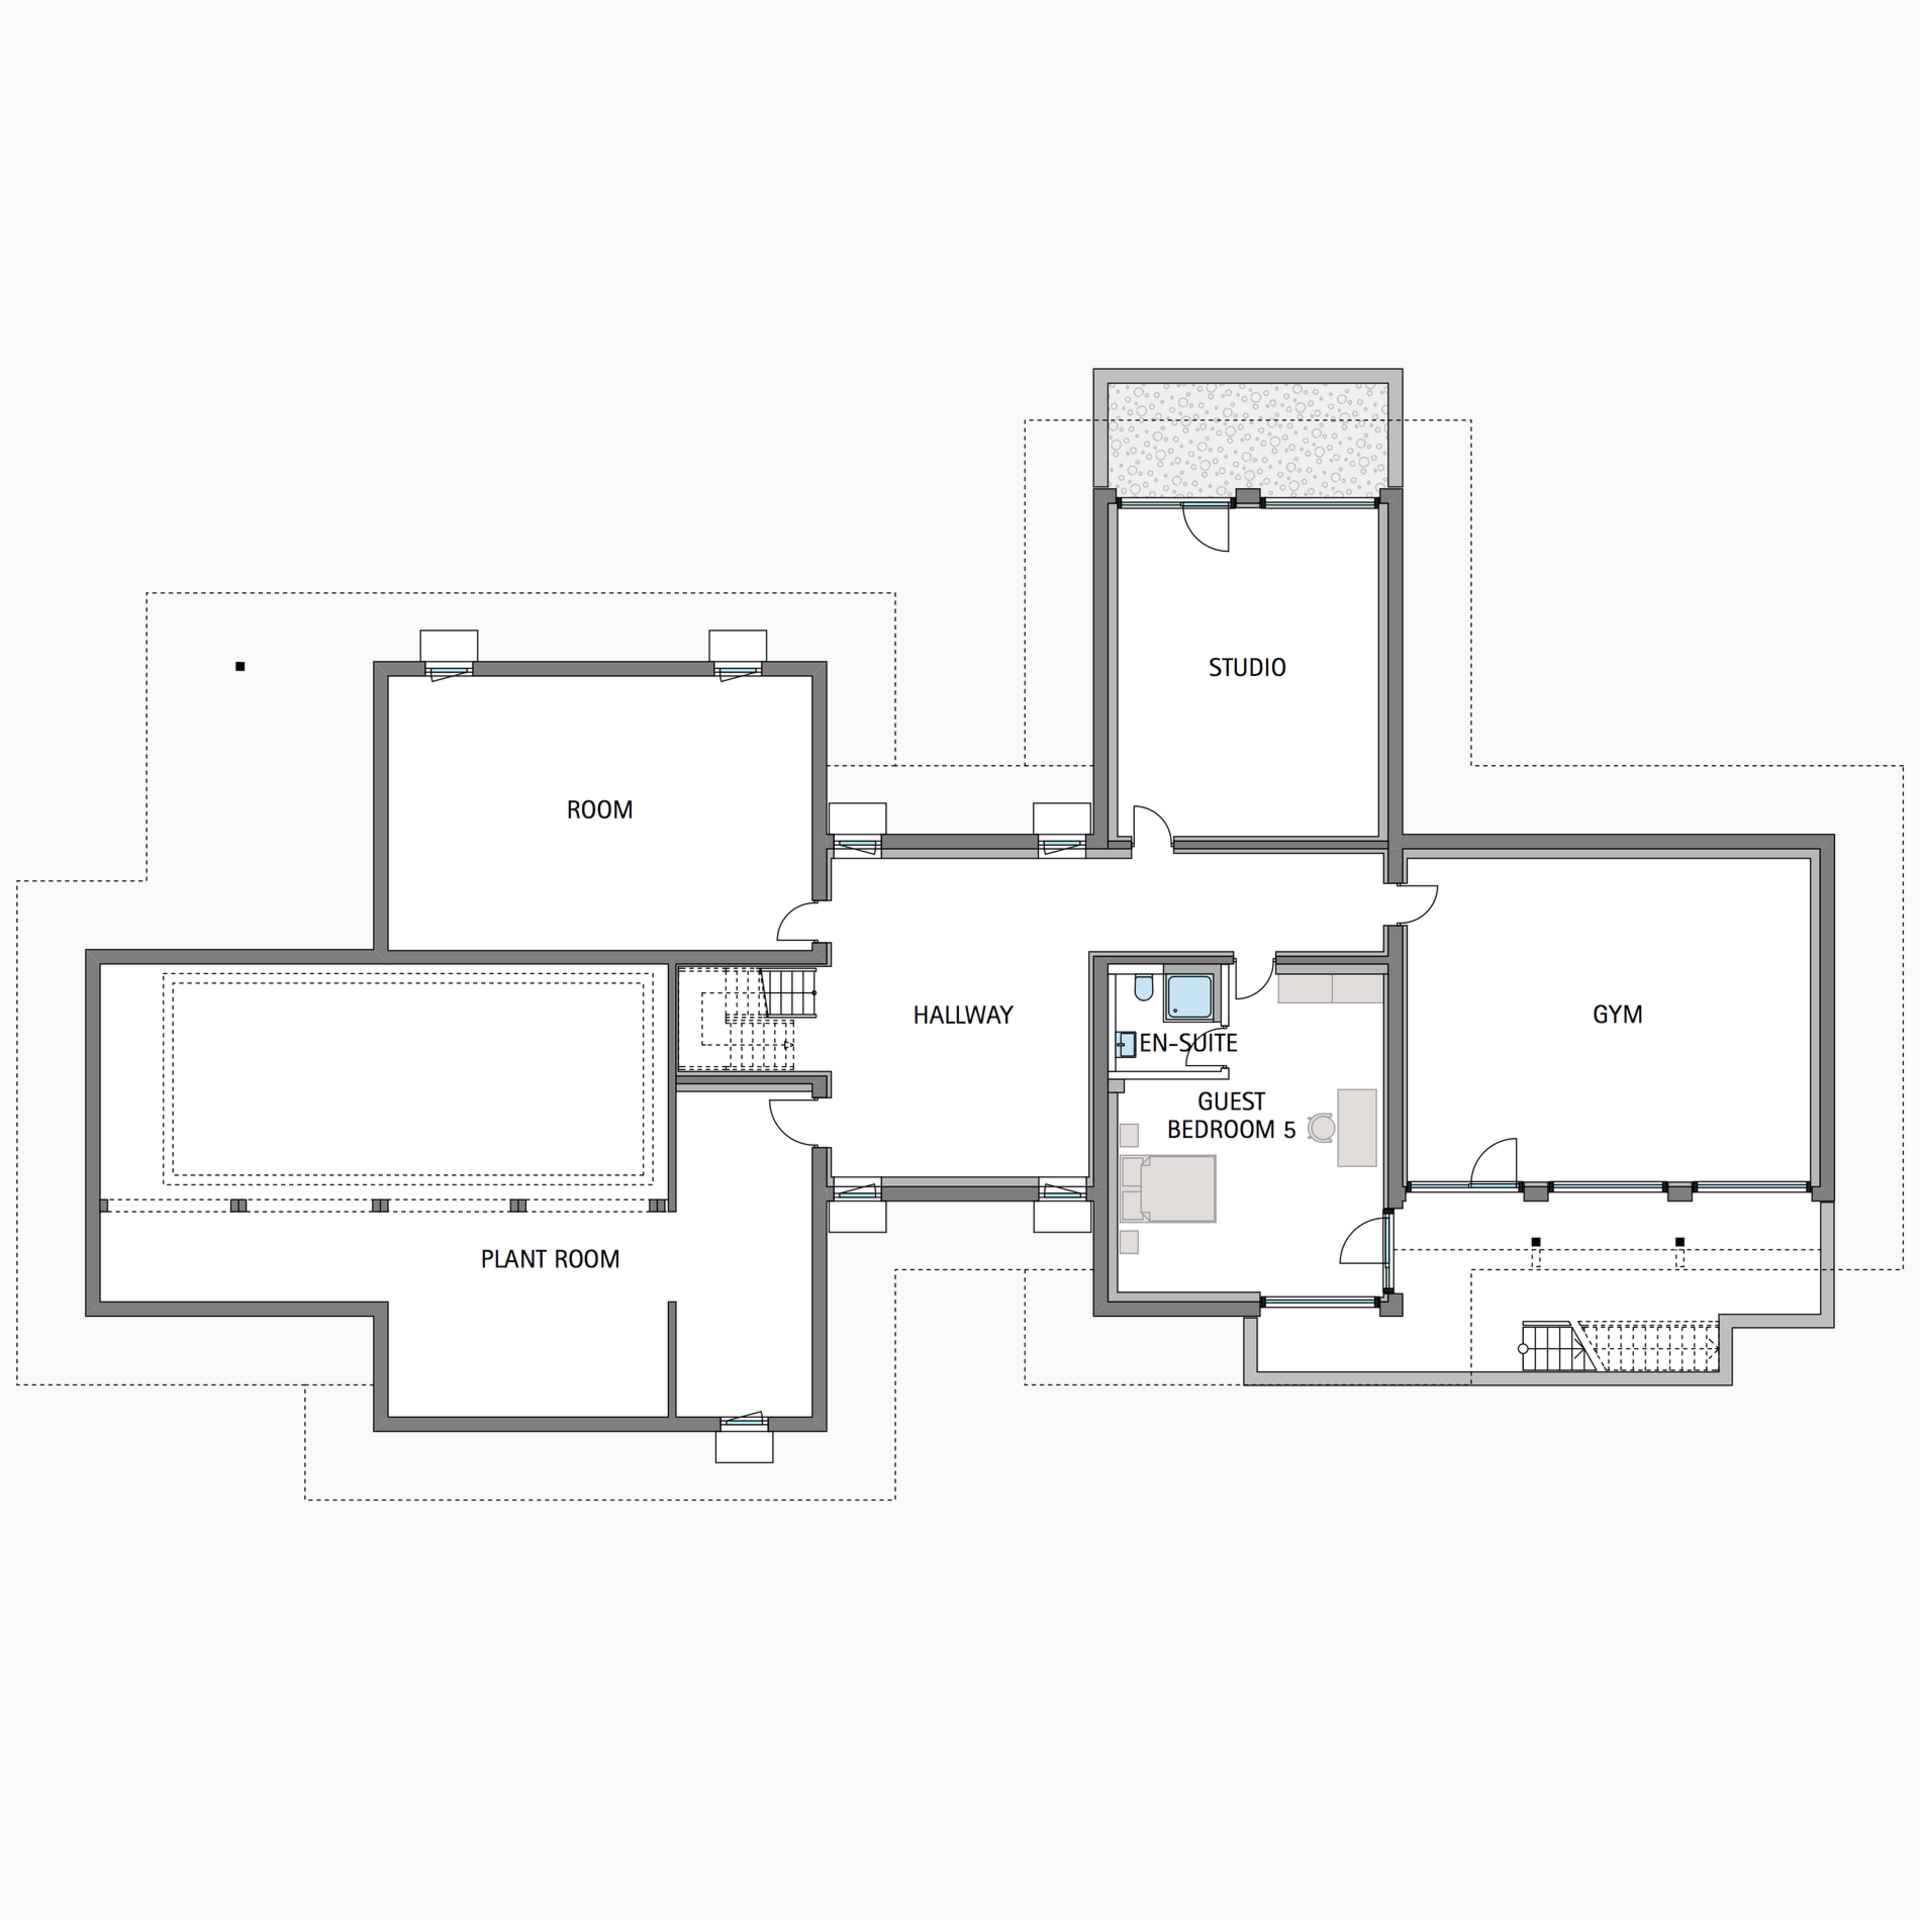 HUF house floor plan basement flat roof